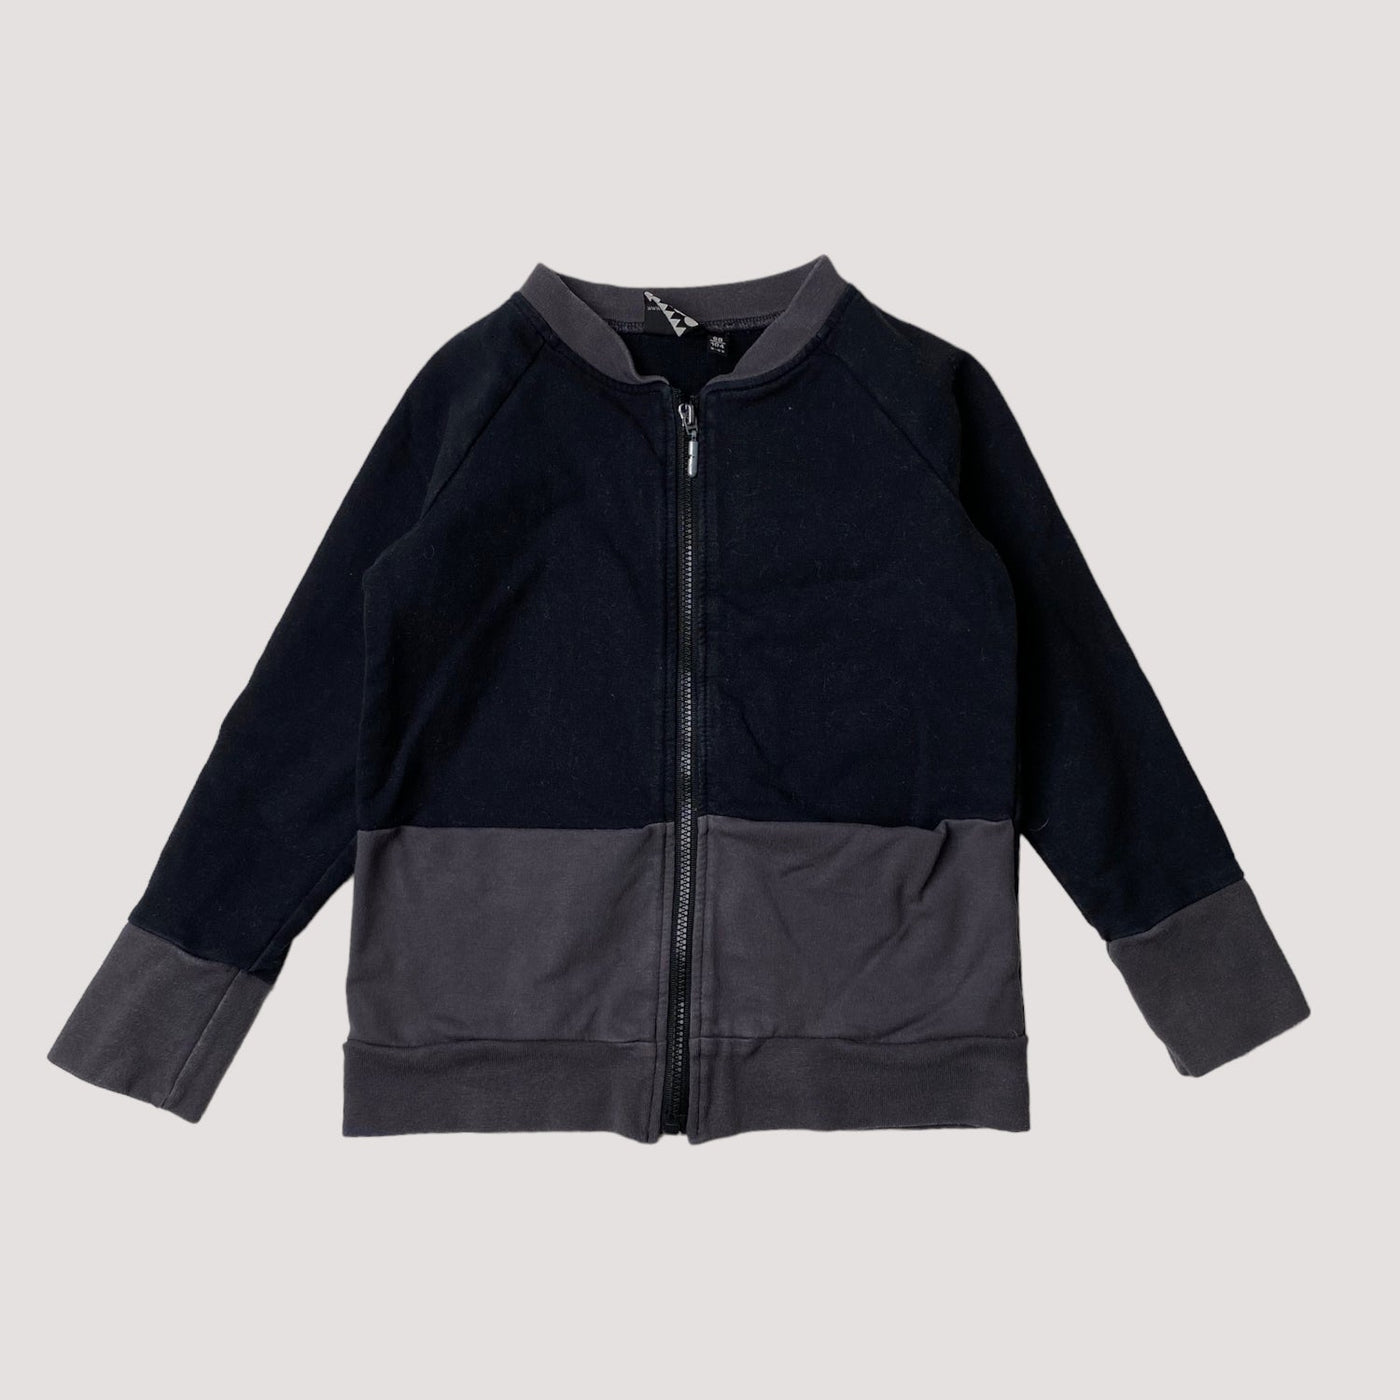 Papu zipper sweat jacket, black/taupe grey | 98/104cm